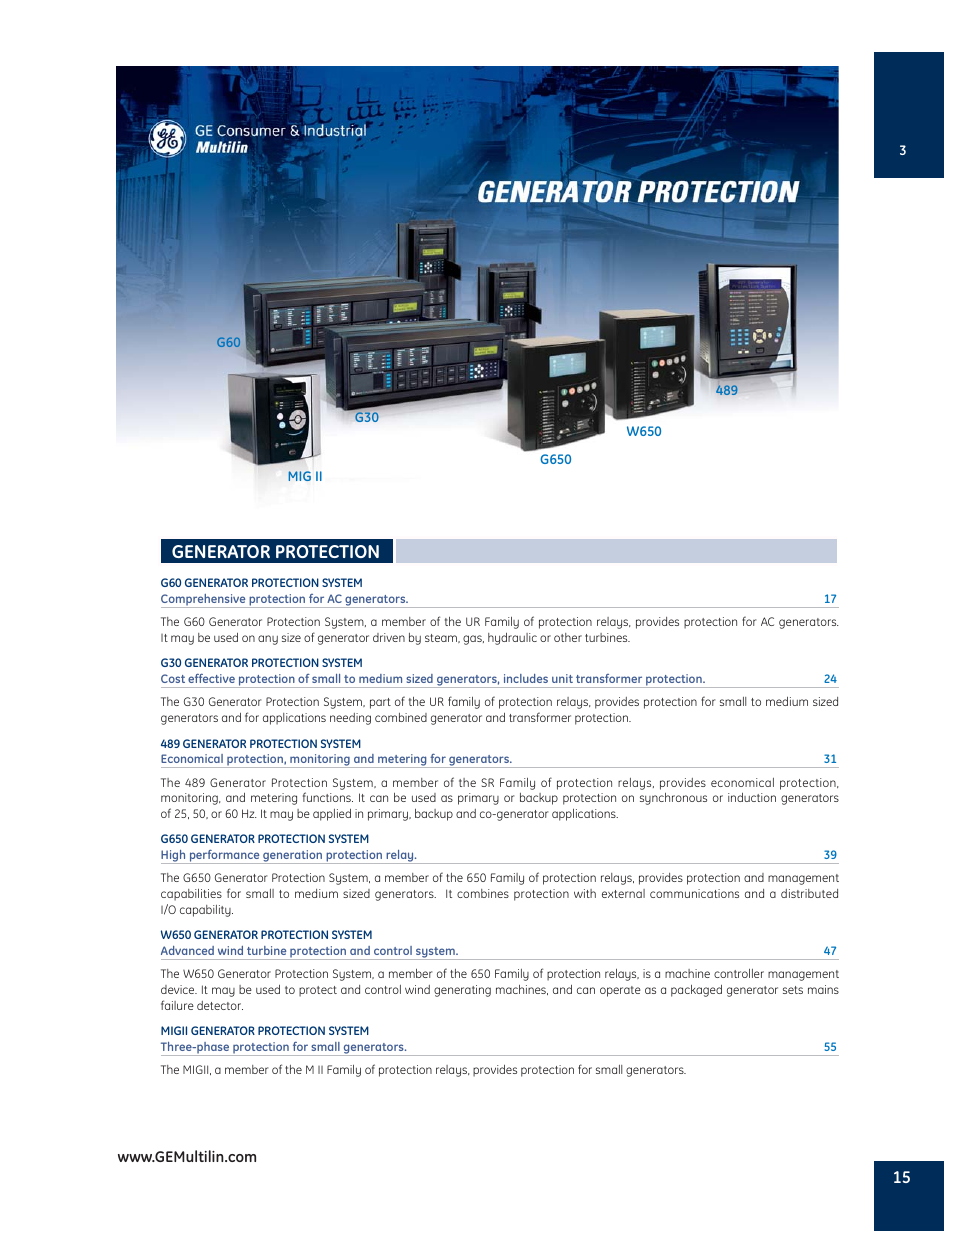 Generator Protection W650